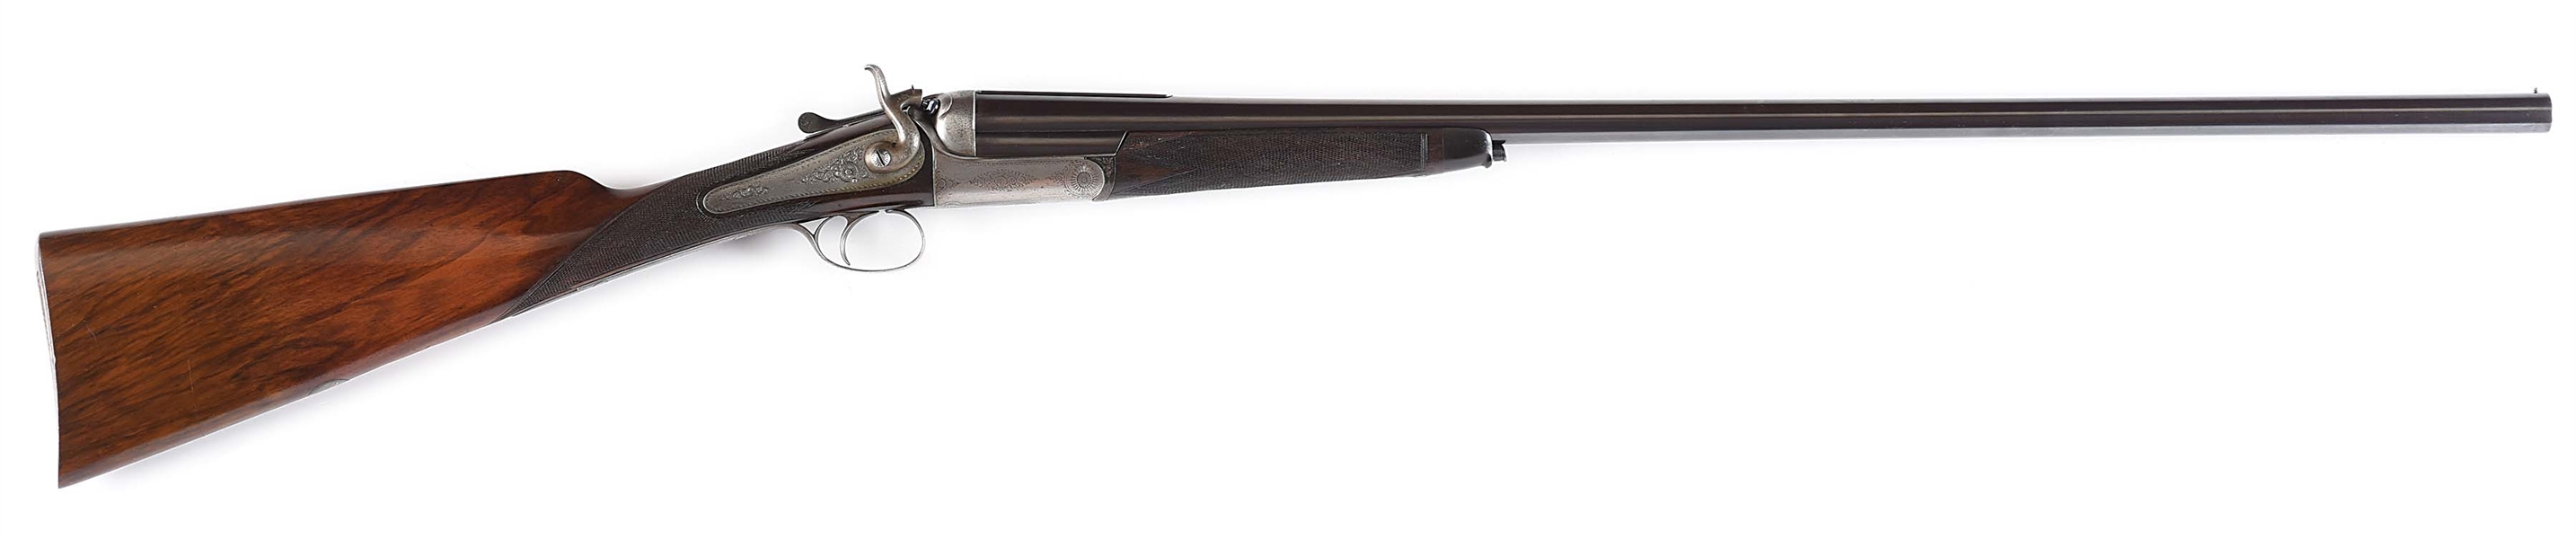 (A) RARE JAMES PURDEY "QUALITY E" 16 GAUGE SINGLE BARREL ISLAND LOCK HAMMER GUN.